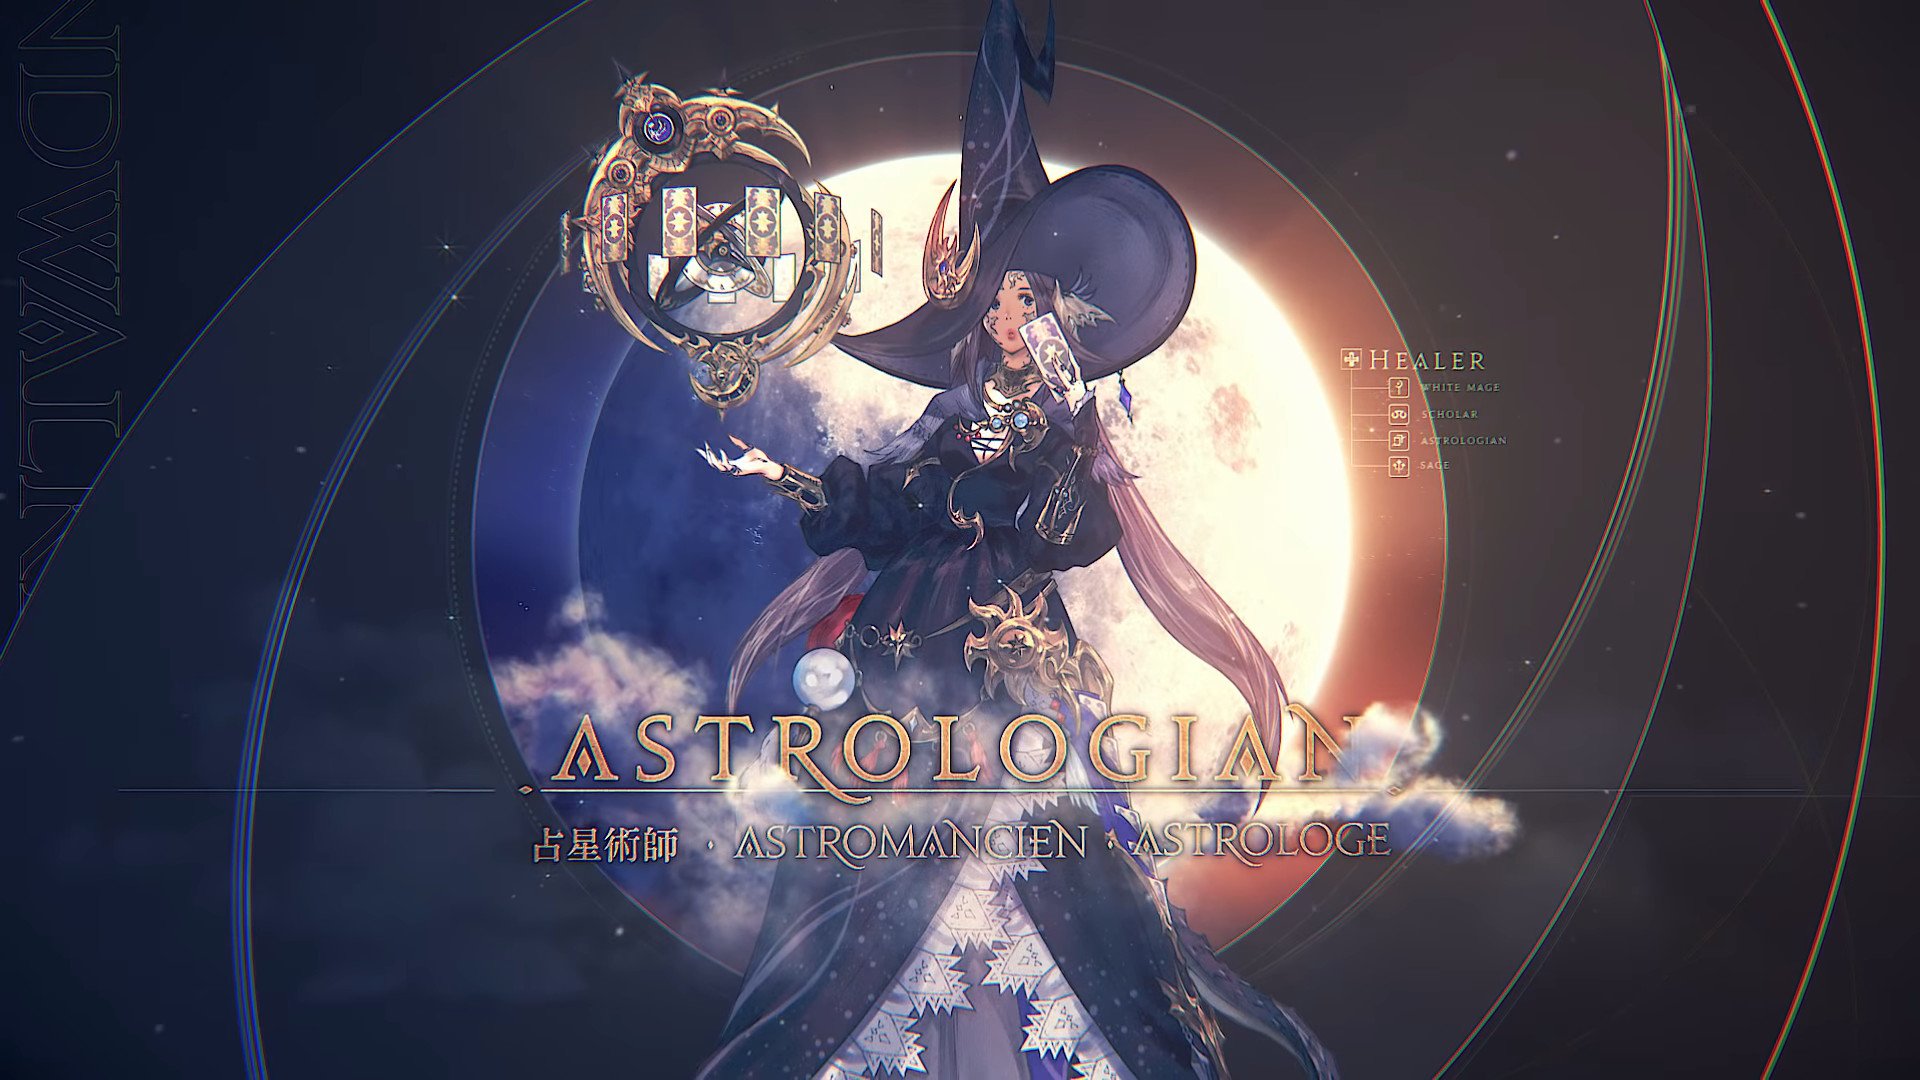 Final Fantasy Xiv Astrologian